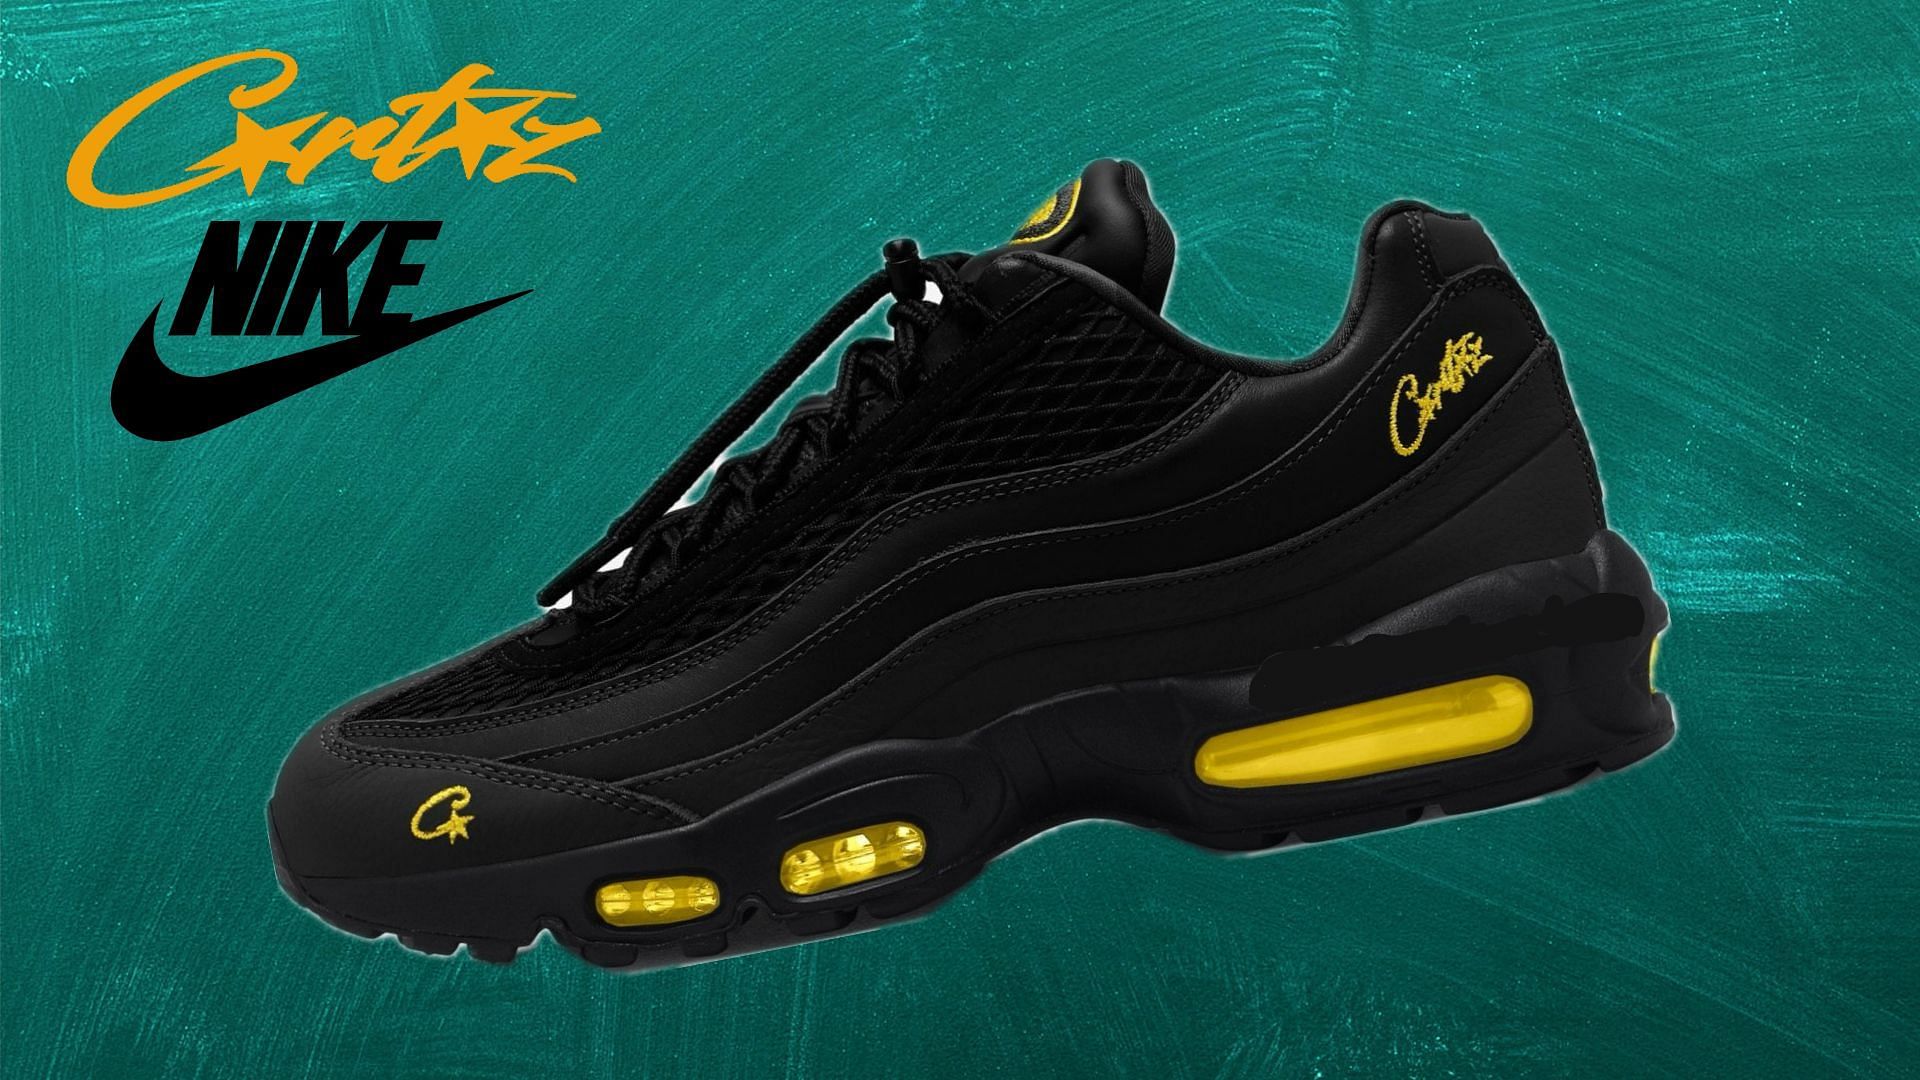 Corteiz x Nike Air Max 95 Tour Yellow sneakers (Image via Twitter/@brandon1an)